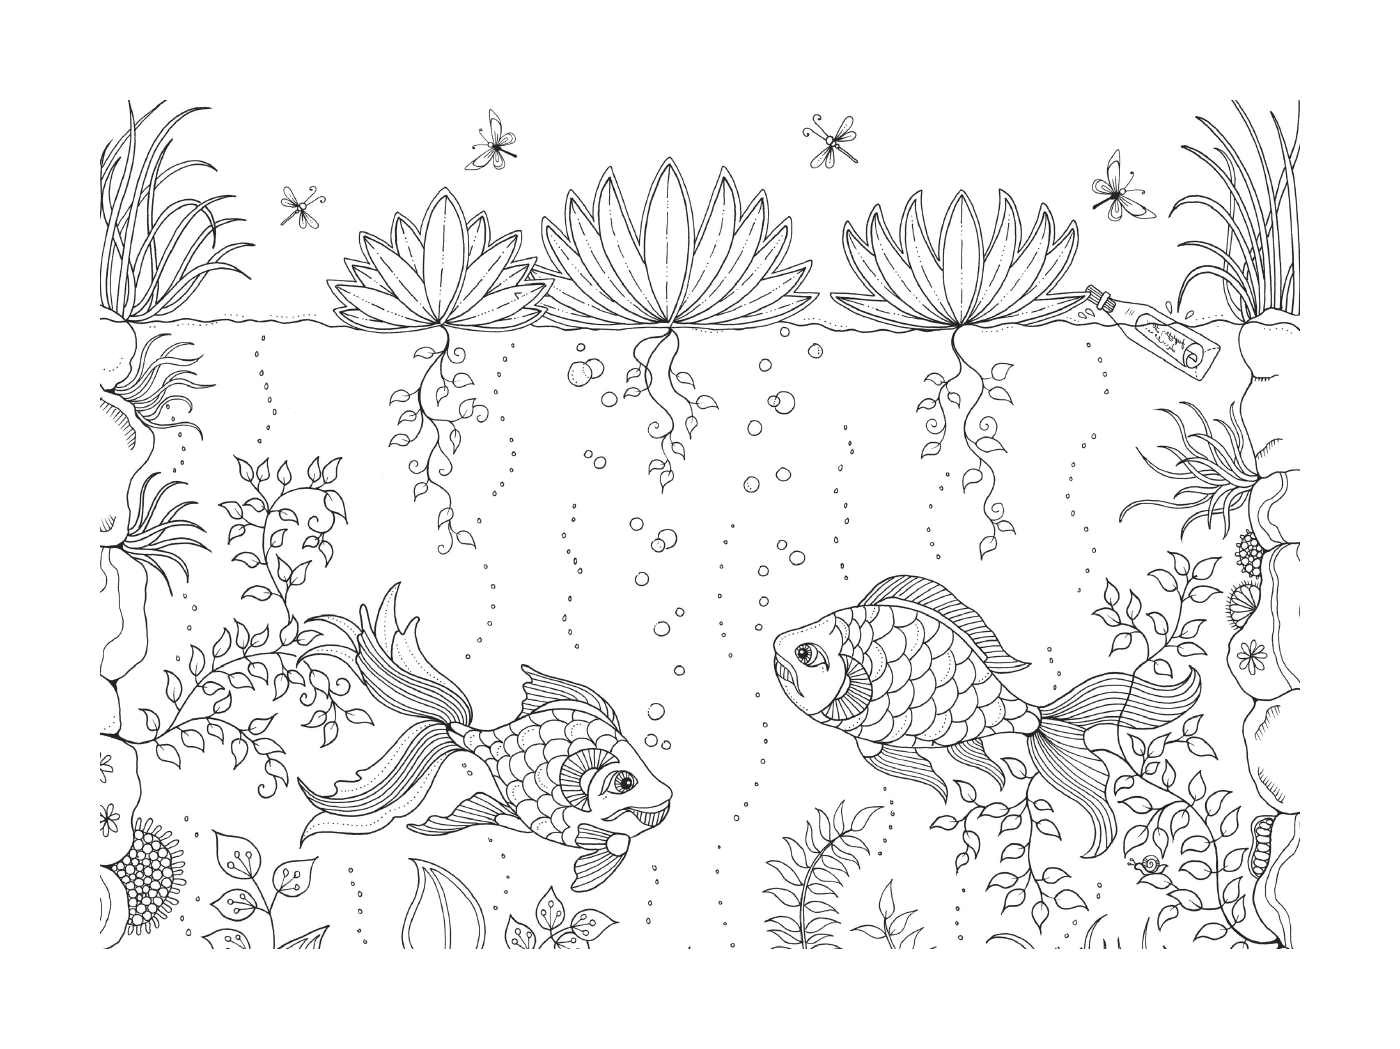   Océan - Poissons nageant 